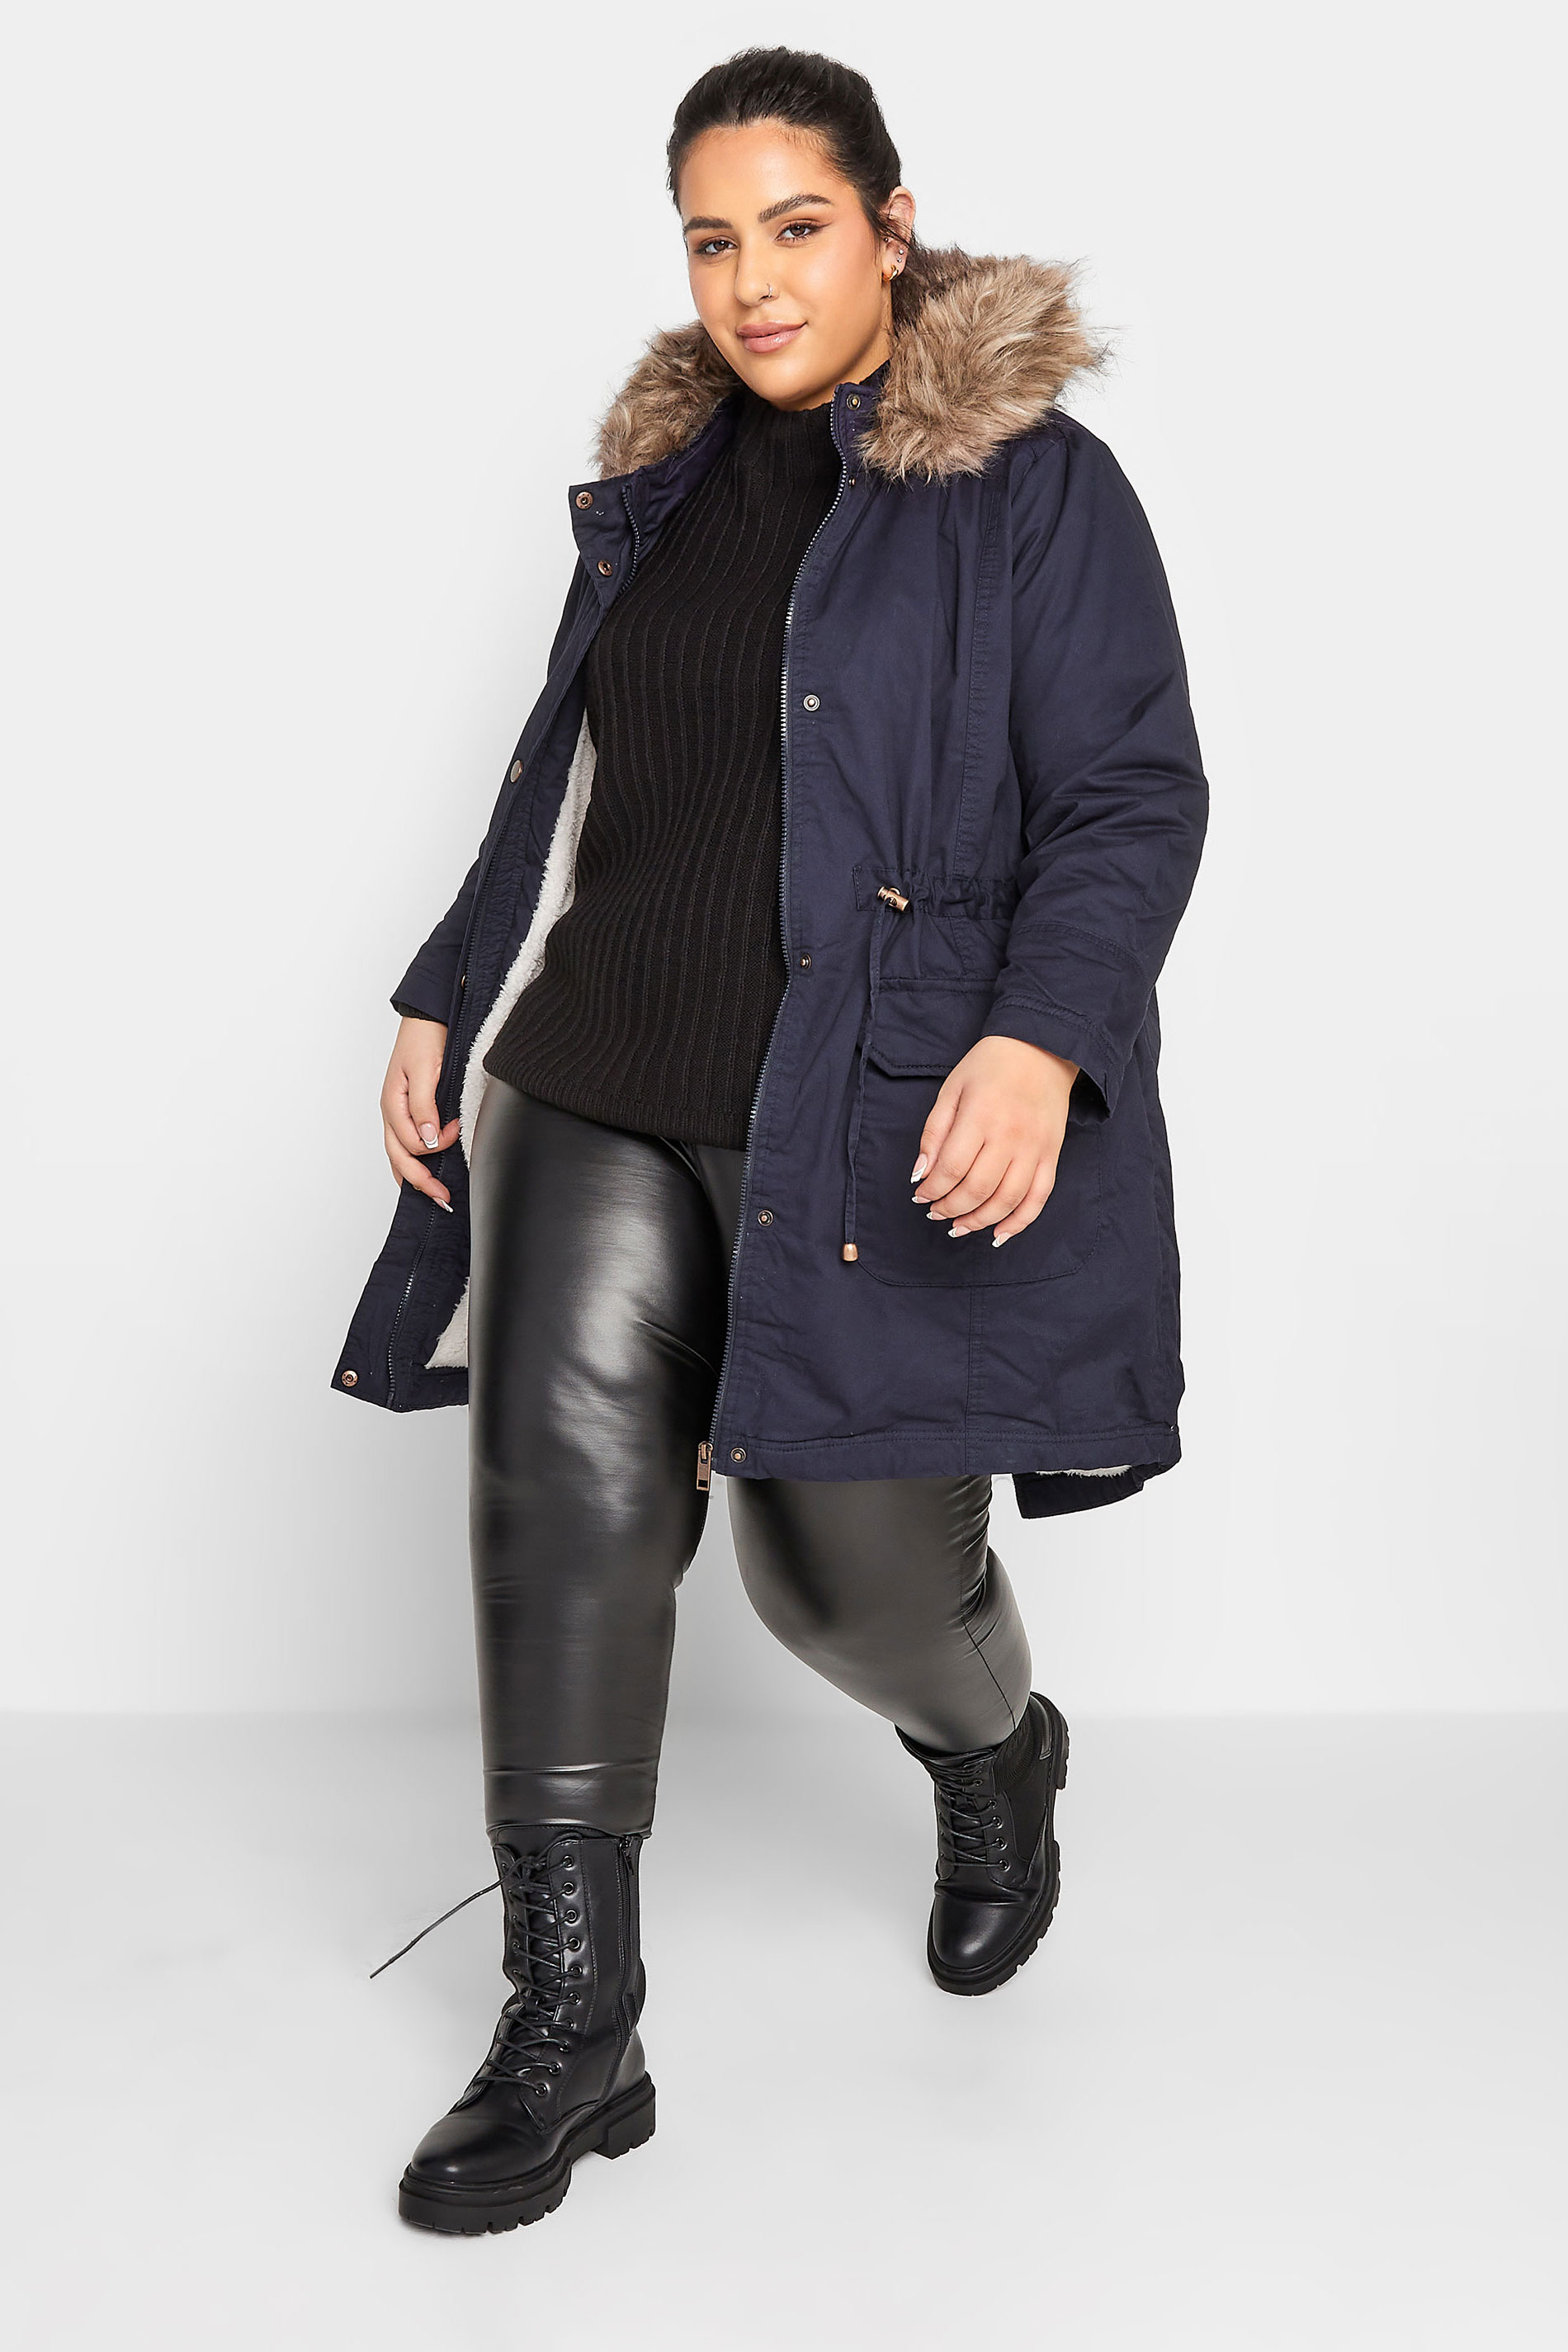 YOURS PETITE Plus Size Navy Blue Faux Fur Trim Hooded Parka Coat | Yours Clothing 2